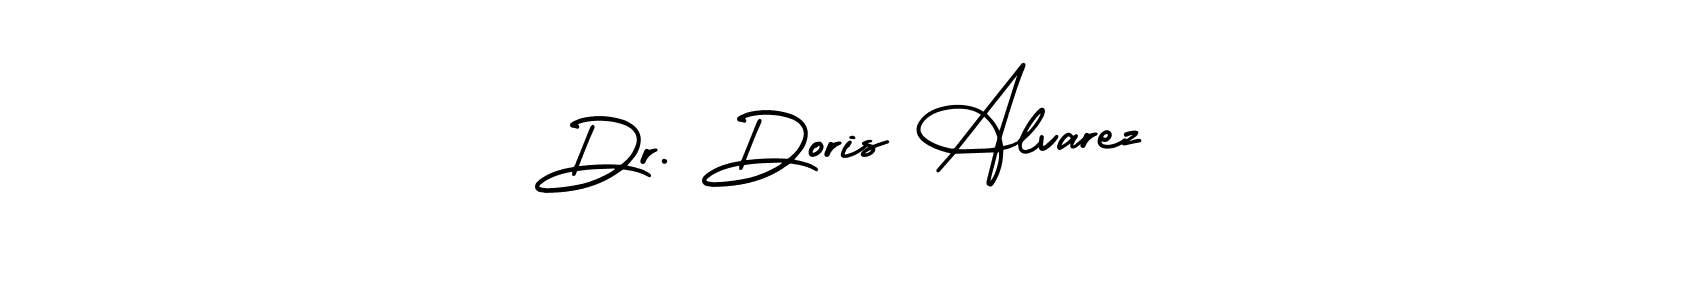 Design your own signature with our free online signature maker. With this signature software, you can create a handwritten (AmerikaSignatureDemo-Regular) signature for name Dr. Doris Alvarez. Dr. Doris Alvarez signature style 3 images and pictures png